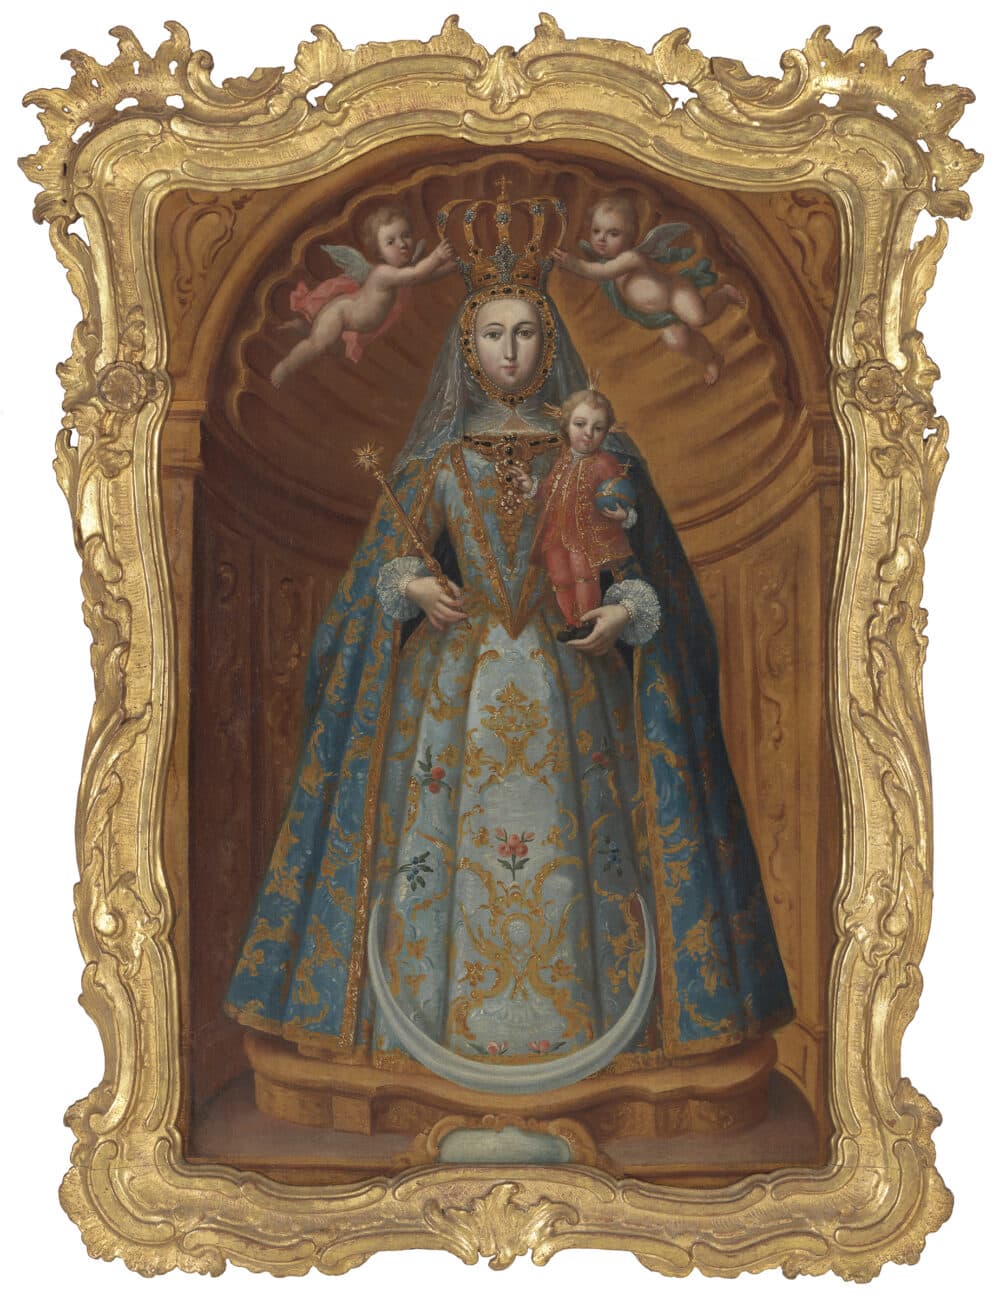 Juan Pedro López, &quot;Nuestra señora de la guía (Our Lady of Guidance),&quot; c. 1765. (Courtesy of the Carl &amp; Marilynn Thoma Foundation; photo by Jamie Stukenberg)